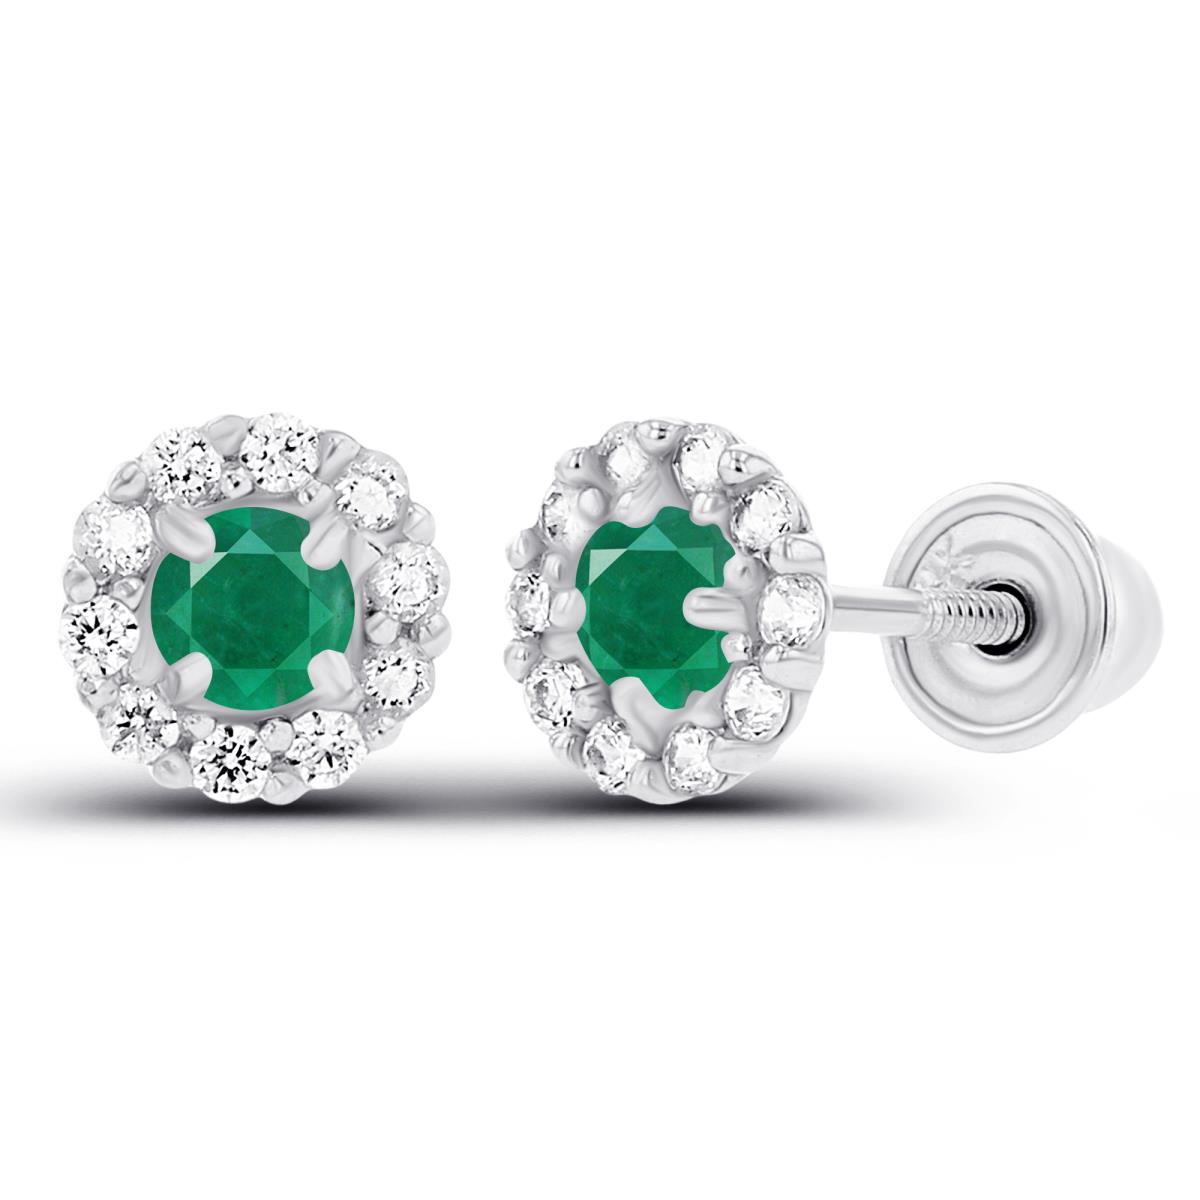 14K White Gold 2.5mm Emerald & 1mm Created White Sapphire Flower Screwback Earrings